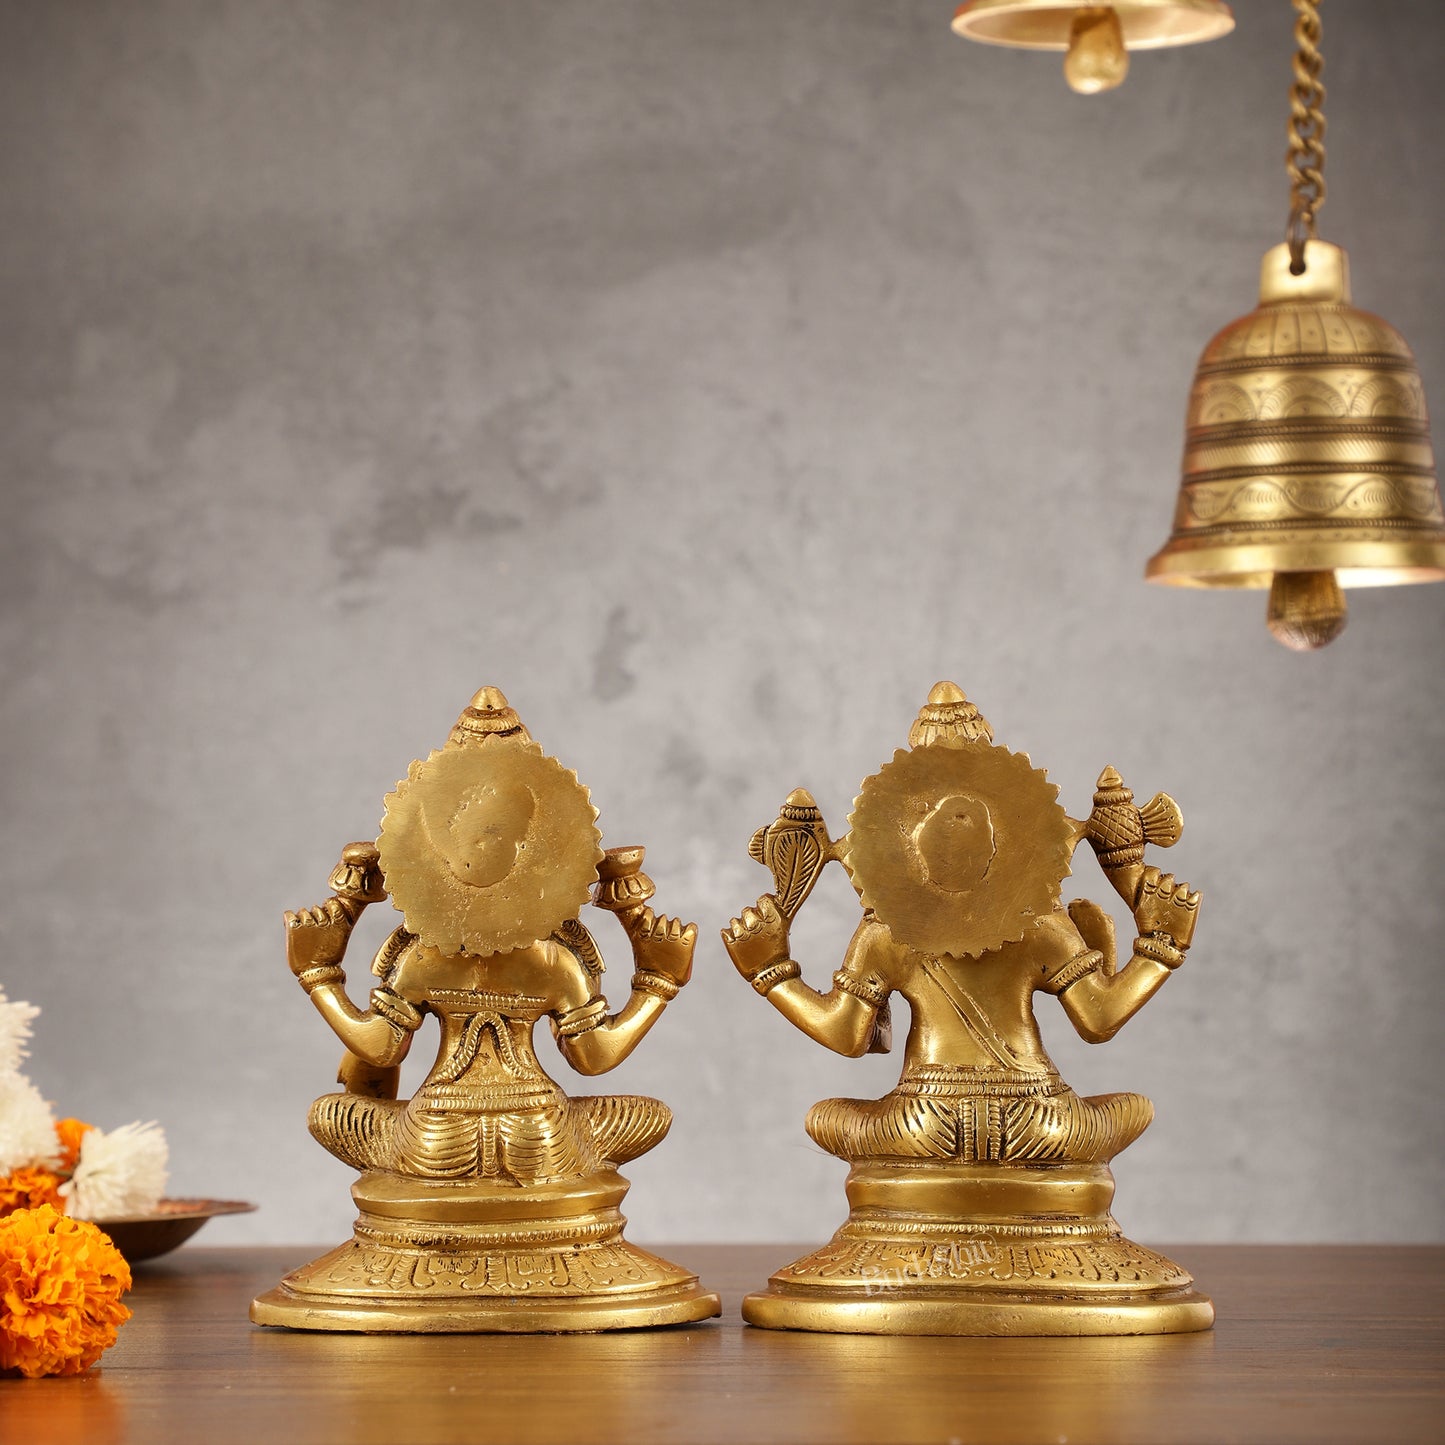 Brass Ganesh Lakshmi idols 6"